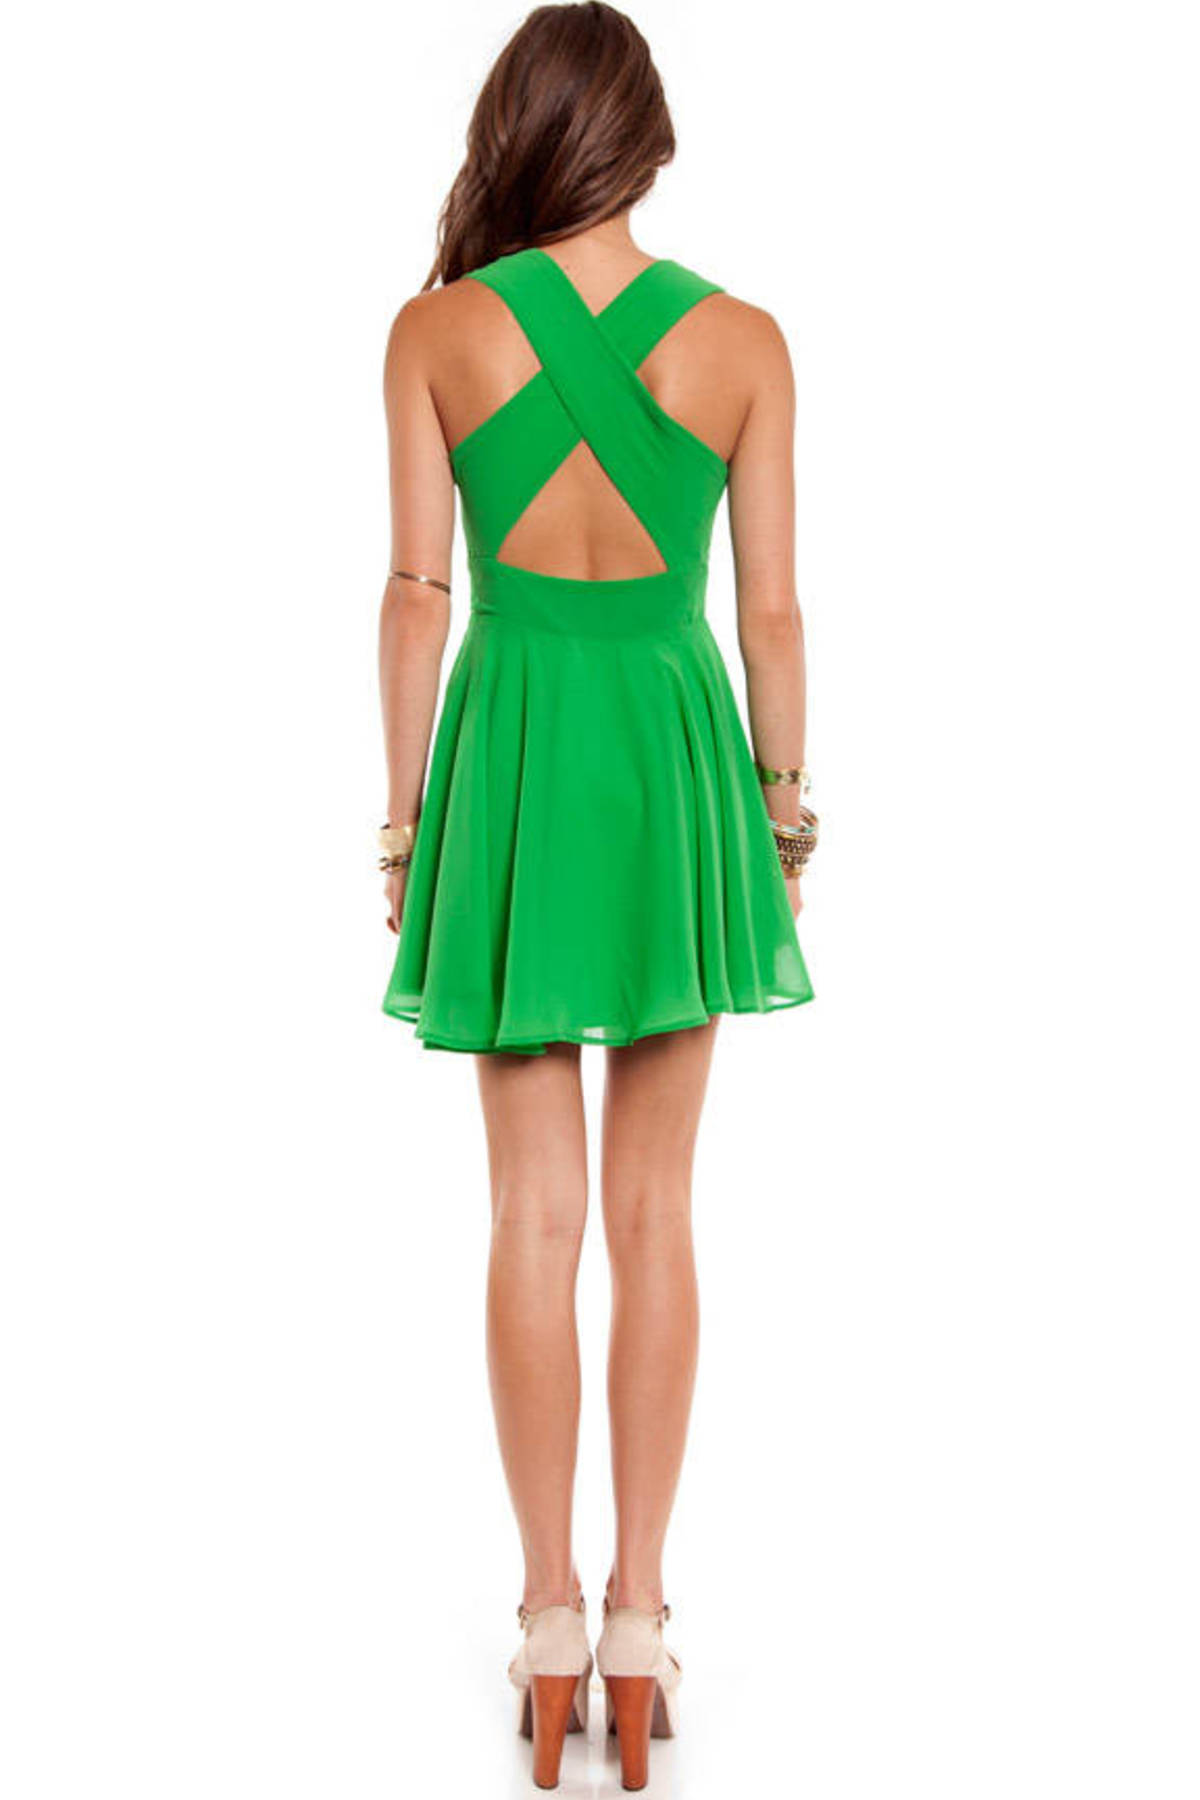 Twirl Around Cross Back Dress in Green - $23 | Tobi US